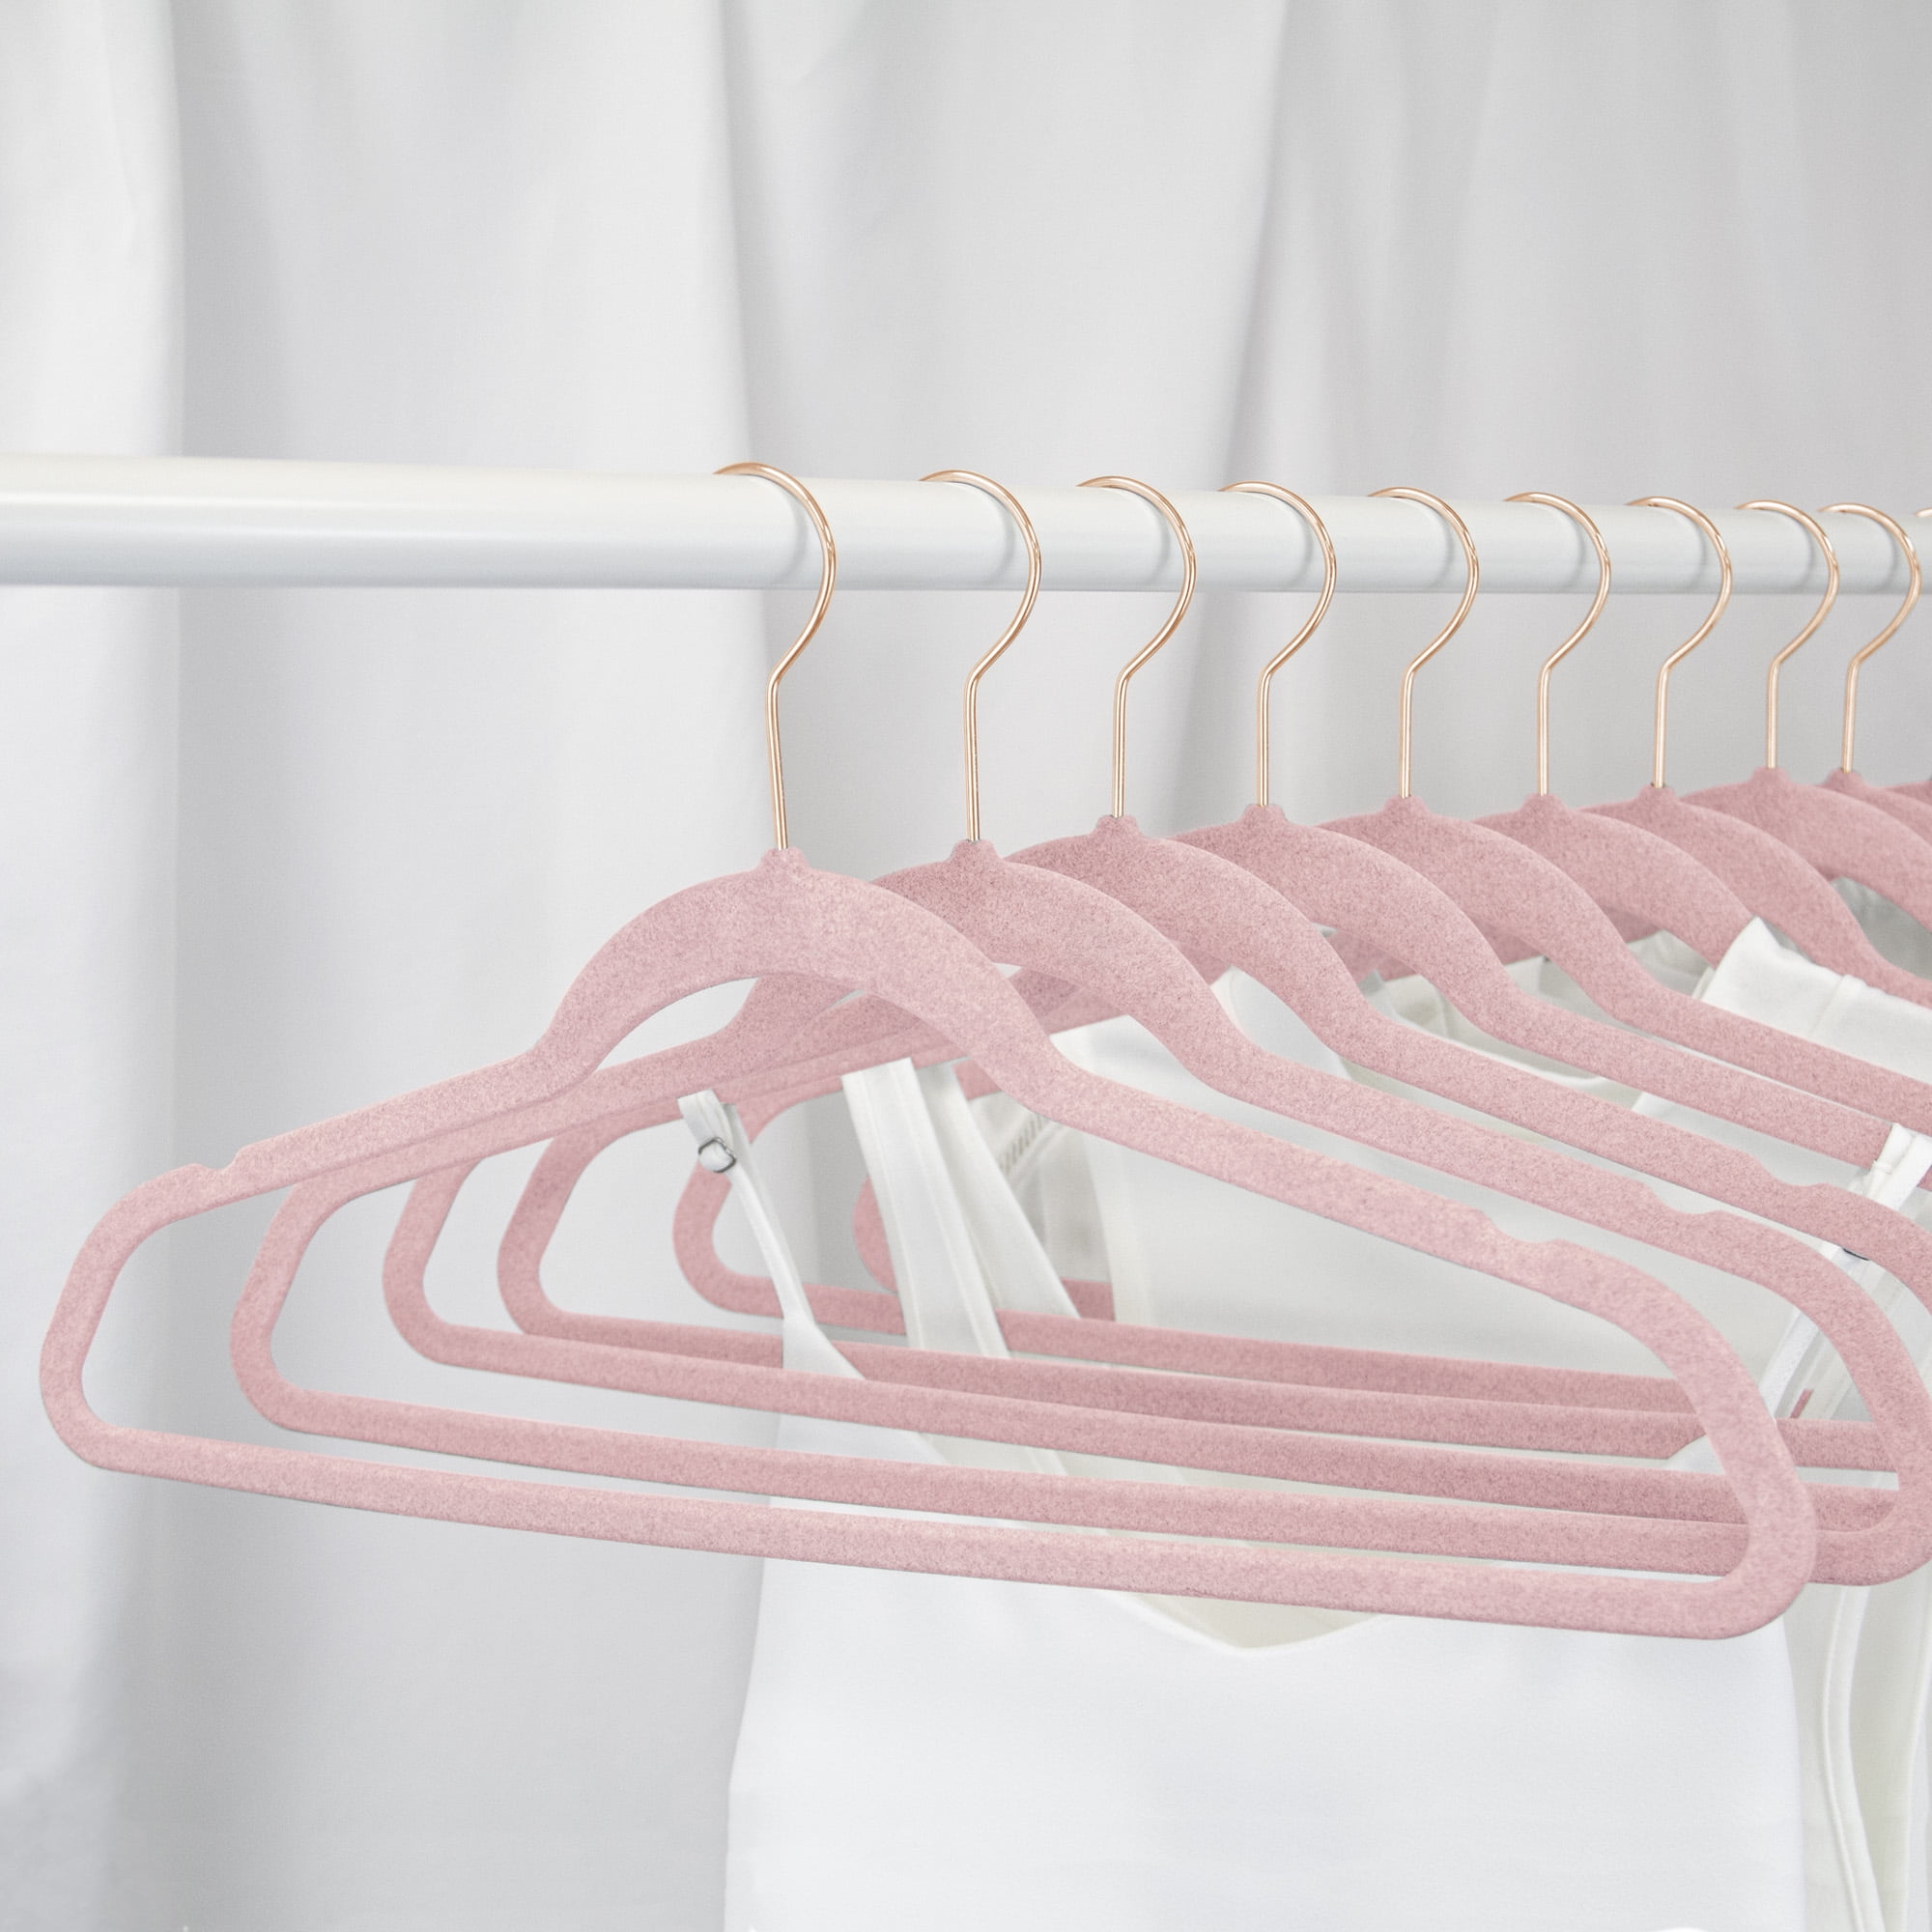 AYTM Vestis Clothes Hanger Set of 2 /Gold - Hooks & Hangers Rose - 500989001081